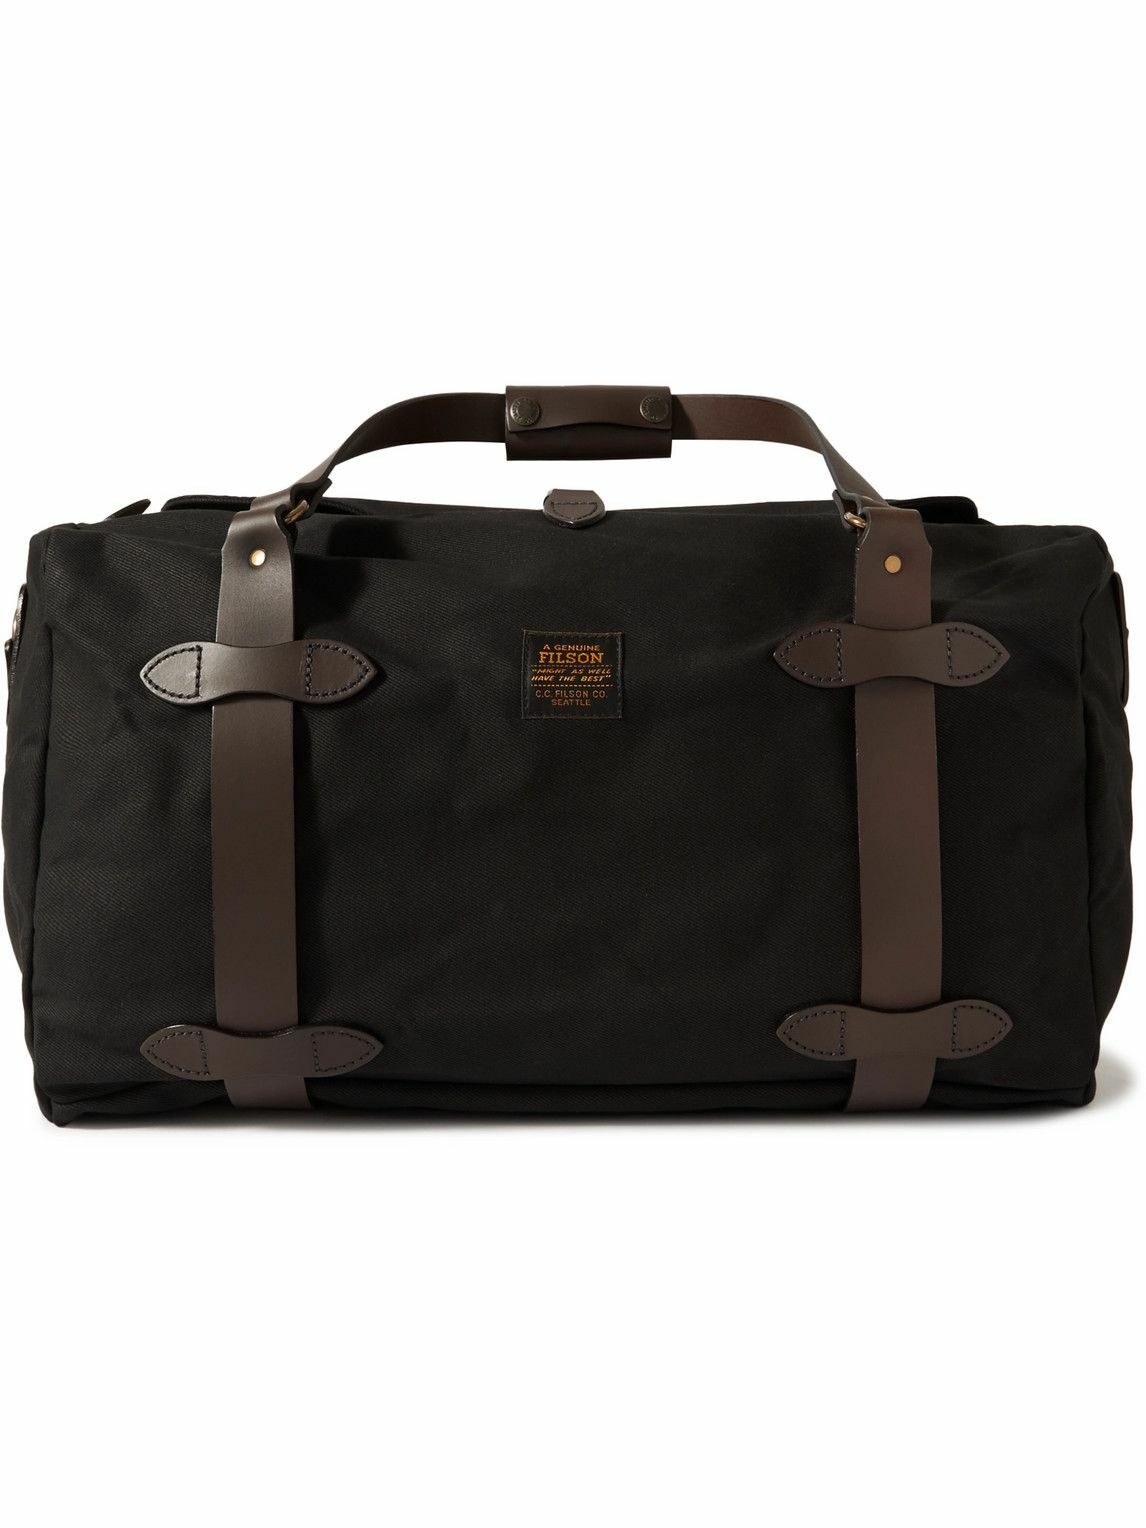 Filson - Medium Leather-Trimmed Twill Weekend Bag Filson